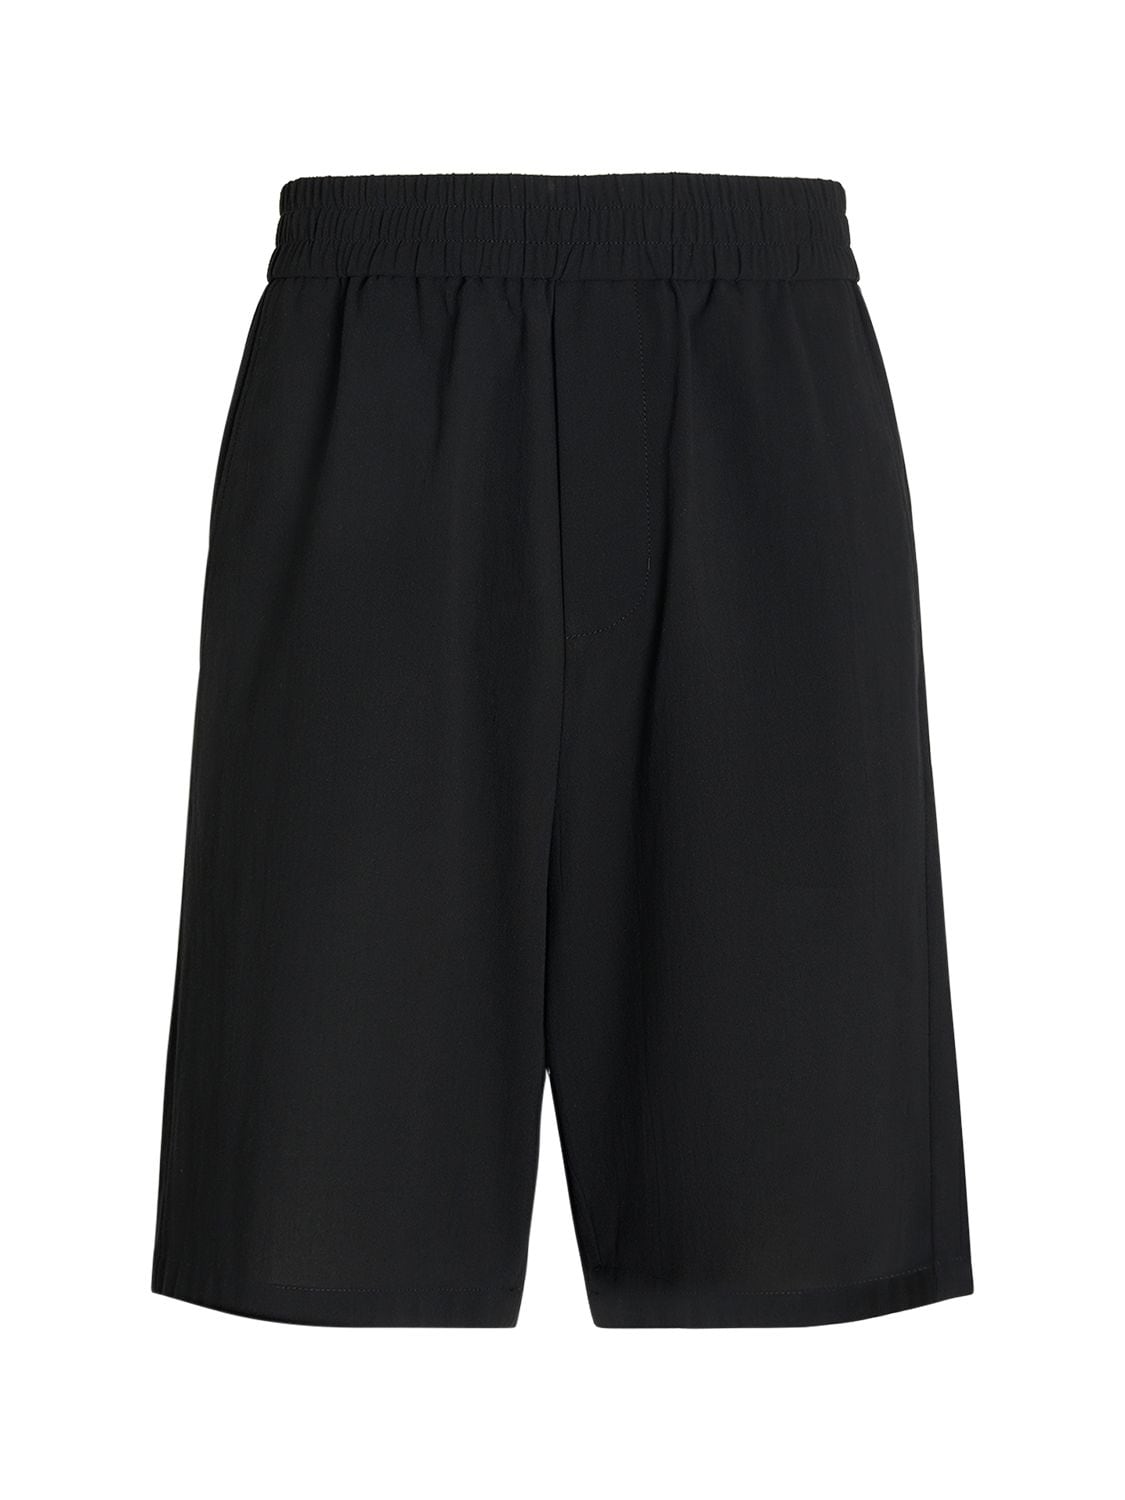 Image of Cotton Crepe Bermuda Shorts